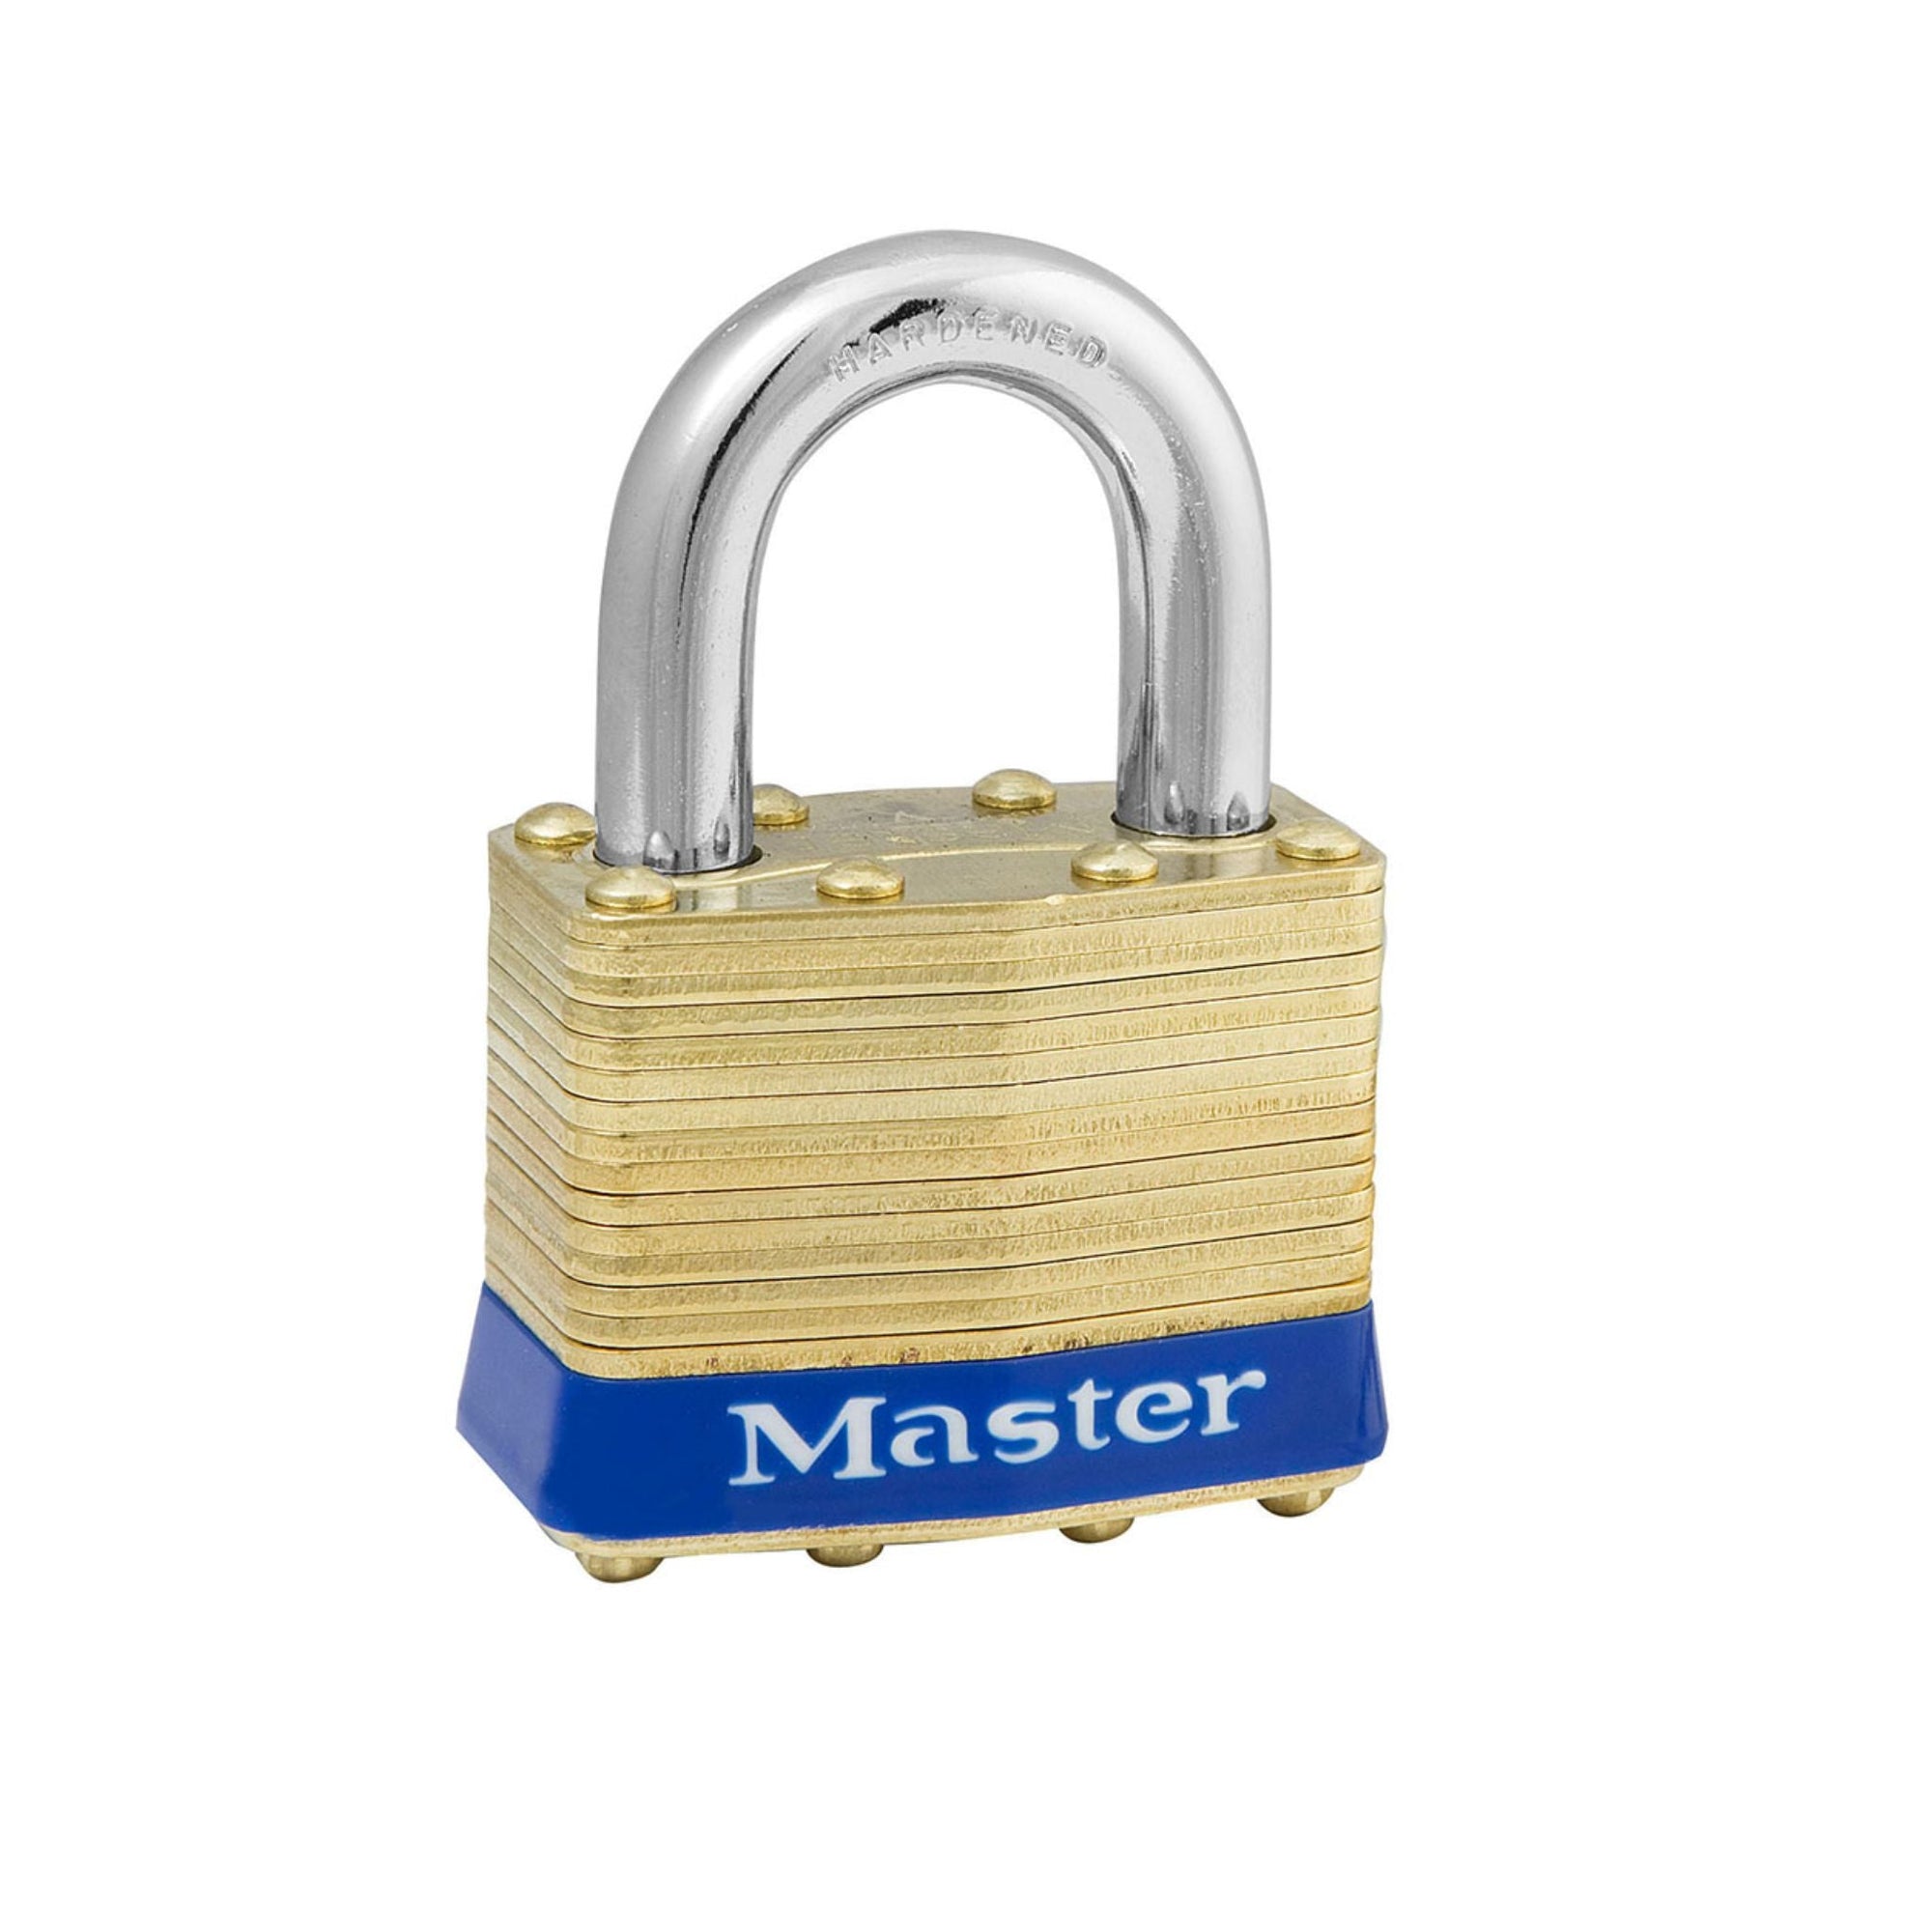 Master Lock 2KA 0314 Lock Laminated brass No. 2 Series Padlock Keyed to Match Existing Key Number KA0314 - The Lock Source